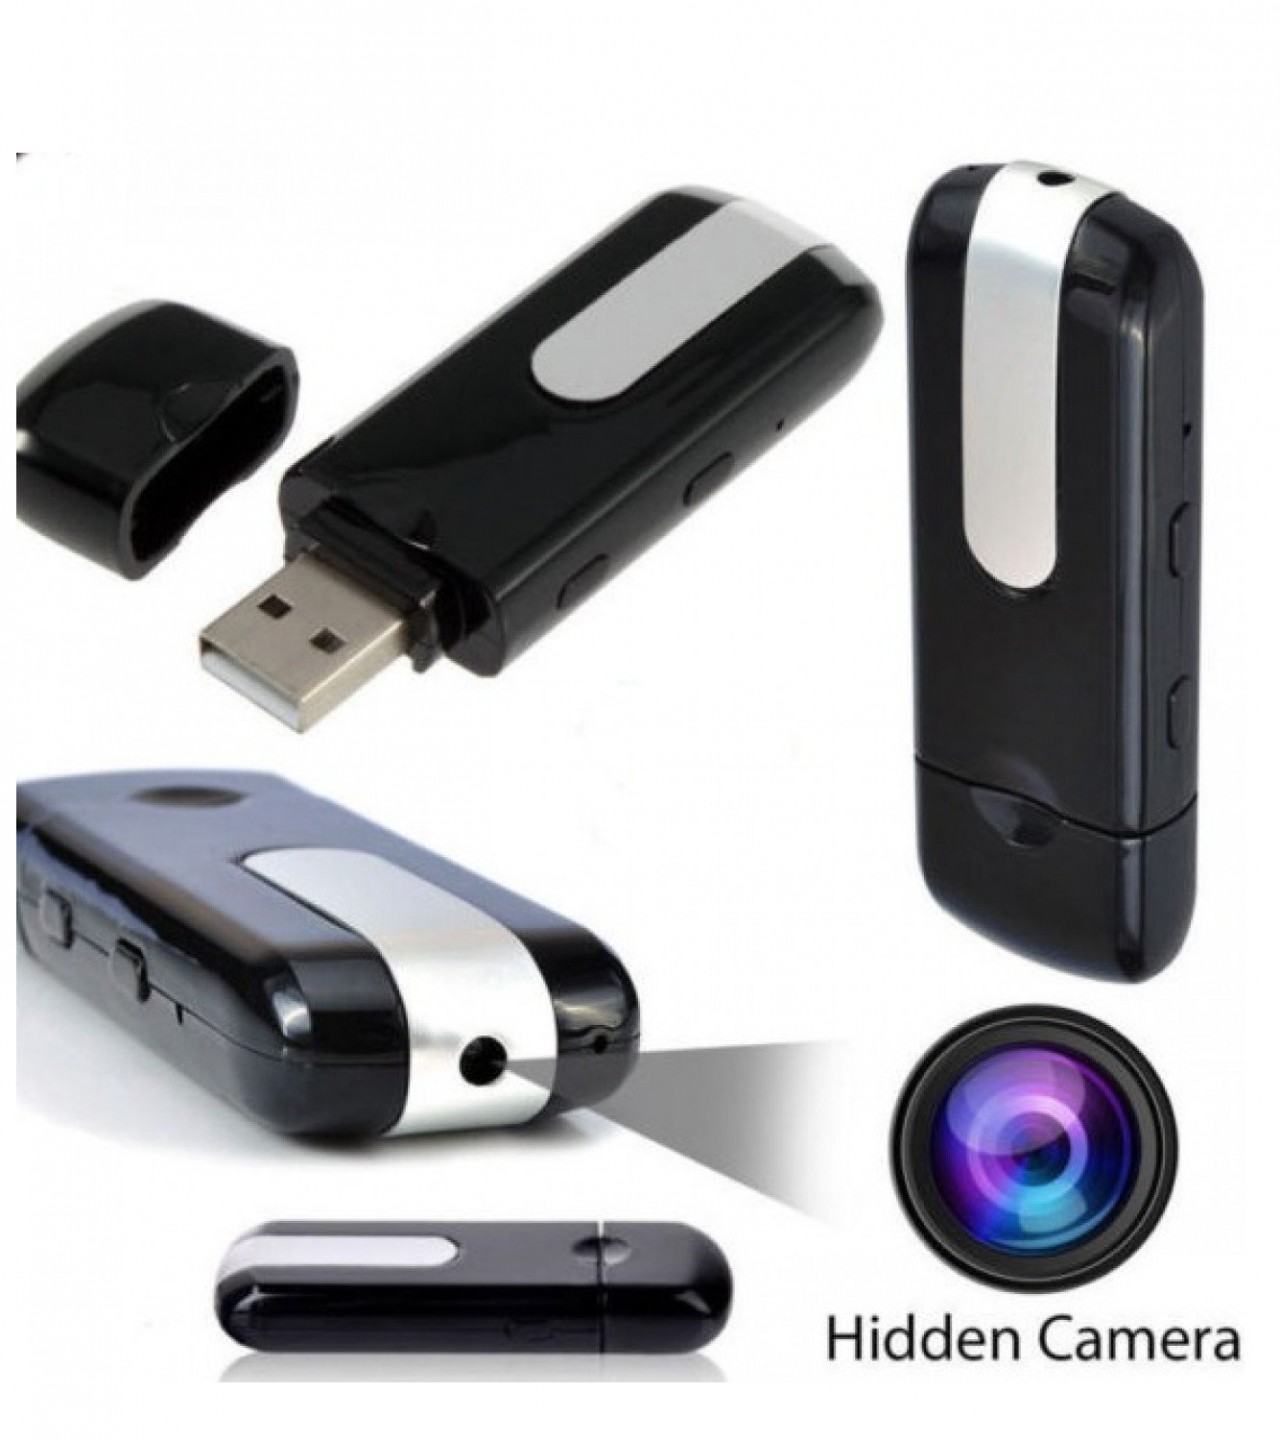 Mini U8 USB Disk HD Hidden Spy Camera Motion Detector